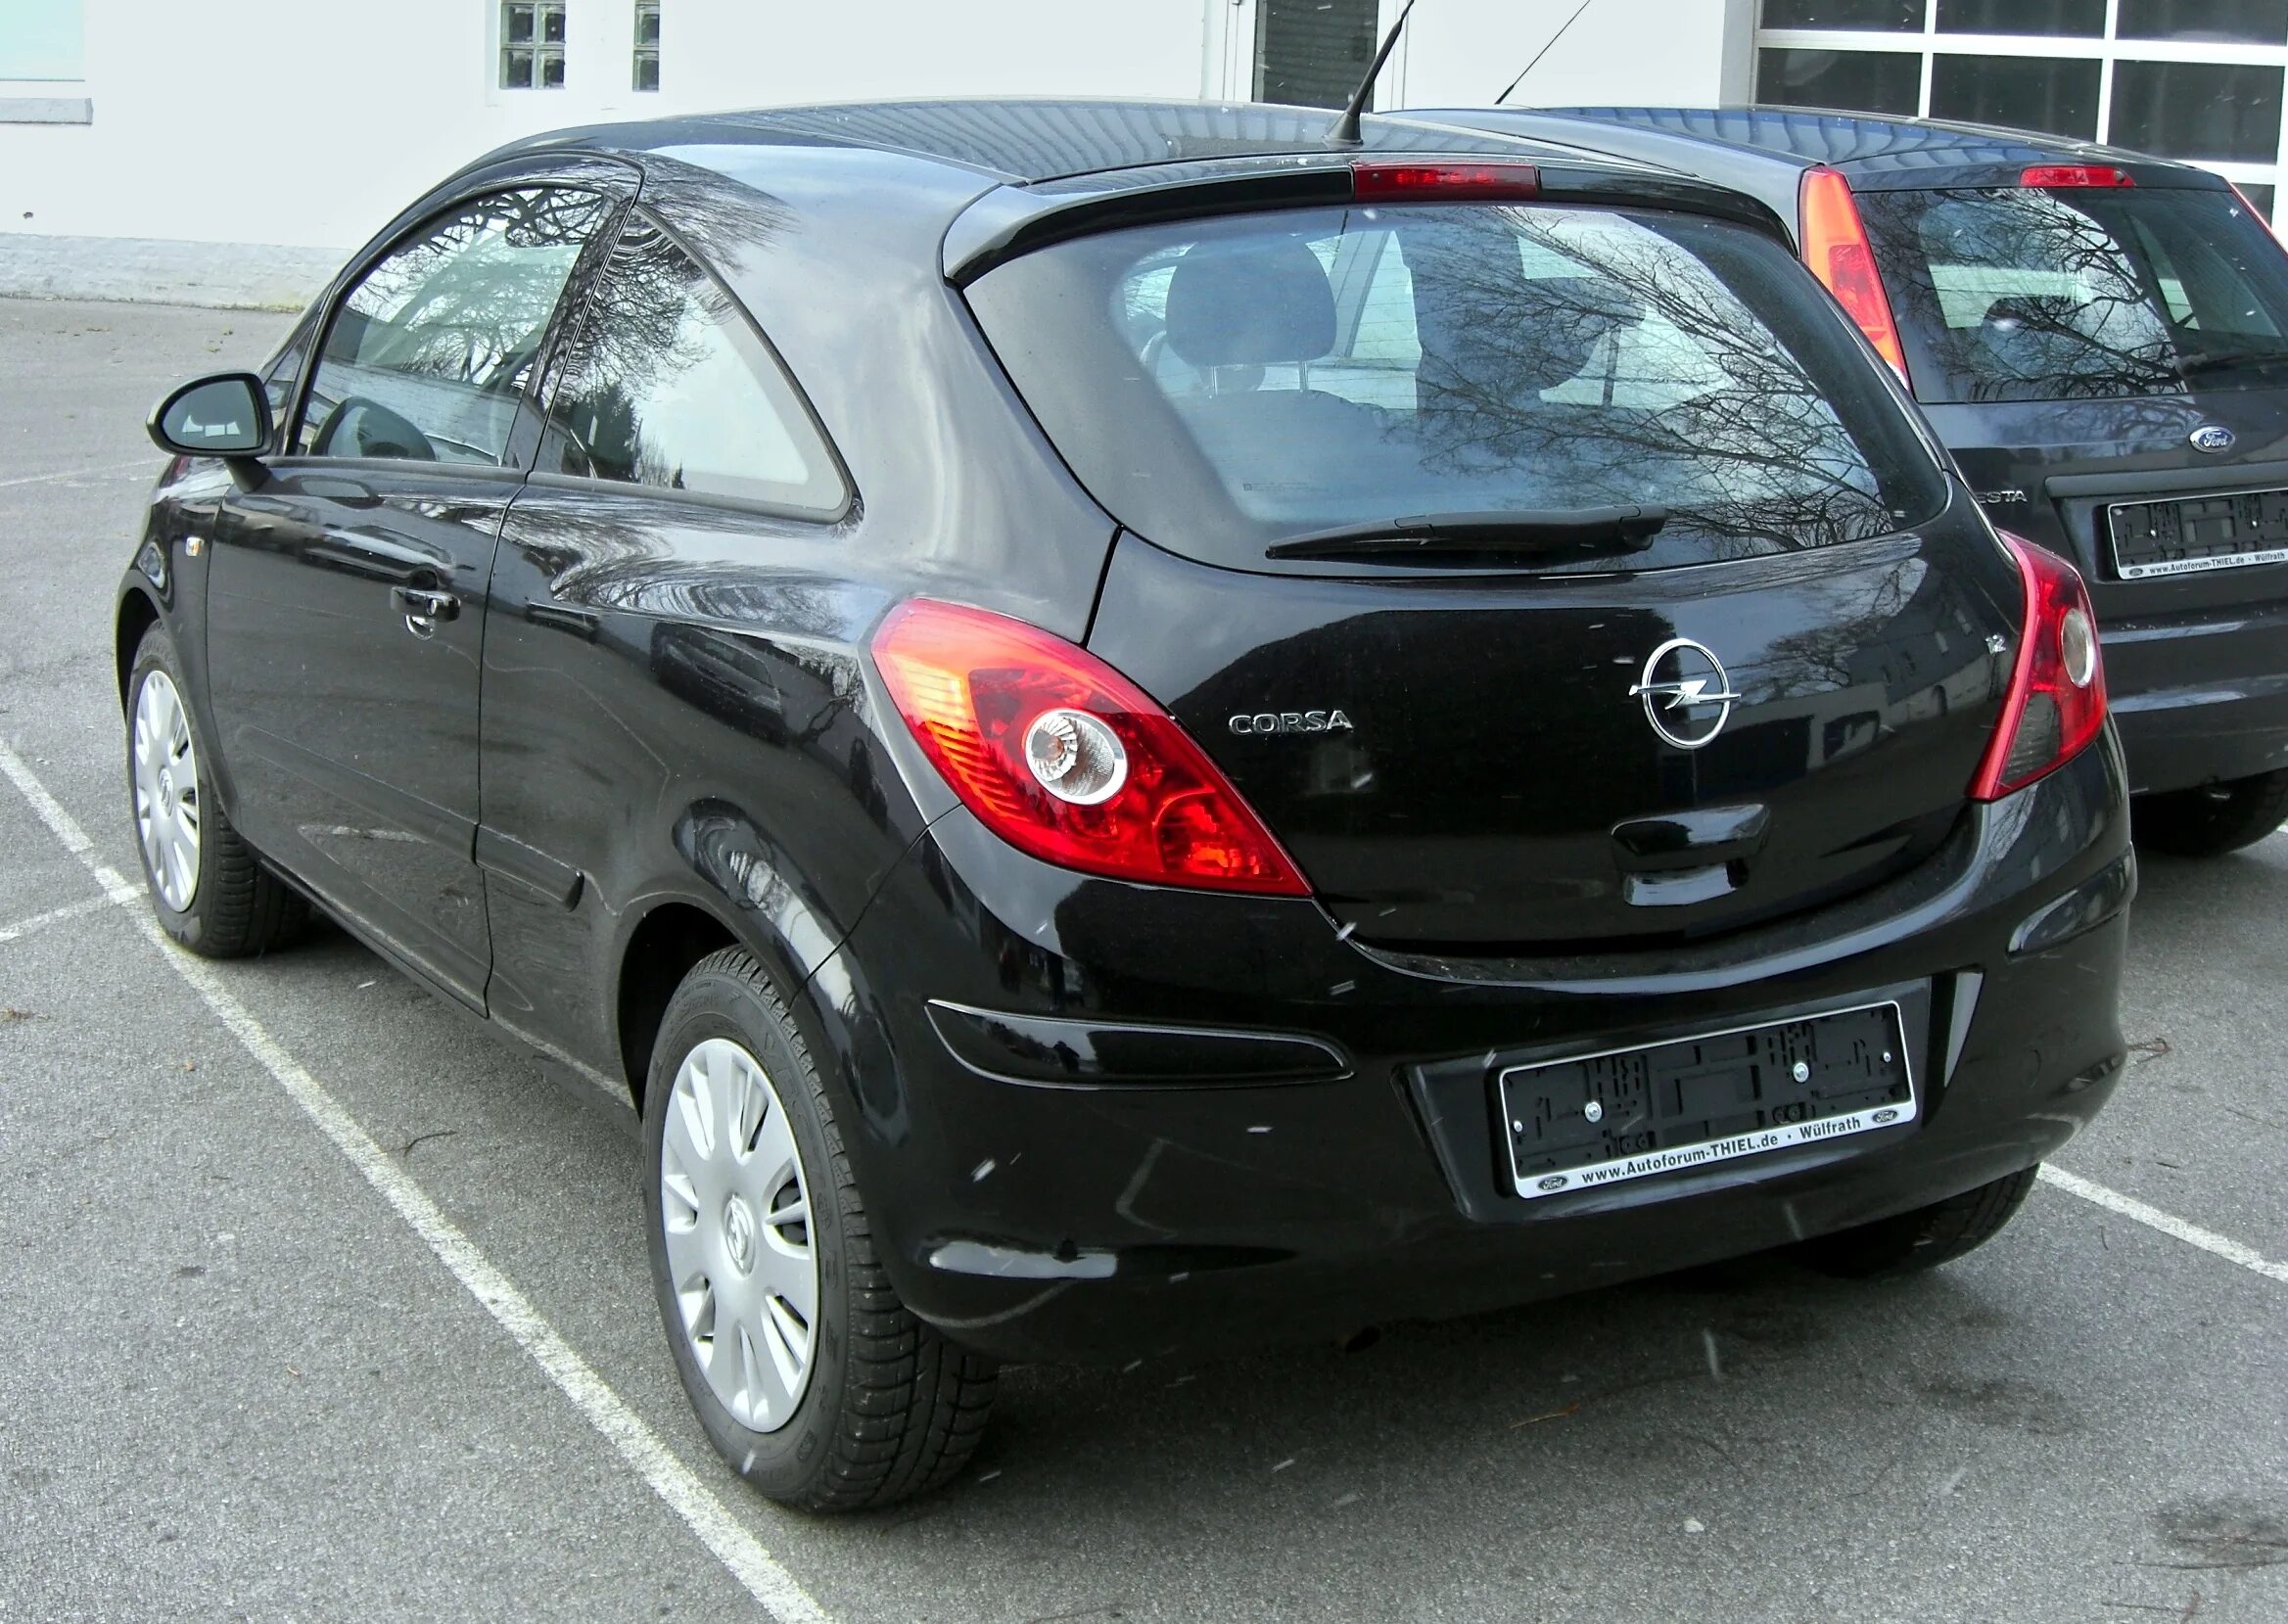 Opel corsa d 2008 год. Opel Corsa 2008 черная. Опель Корса 1.2 2008. Опель Корса купе 2008. Опель Корса 2008 черная.